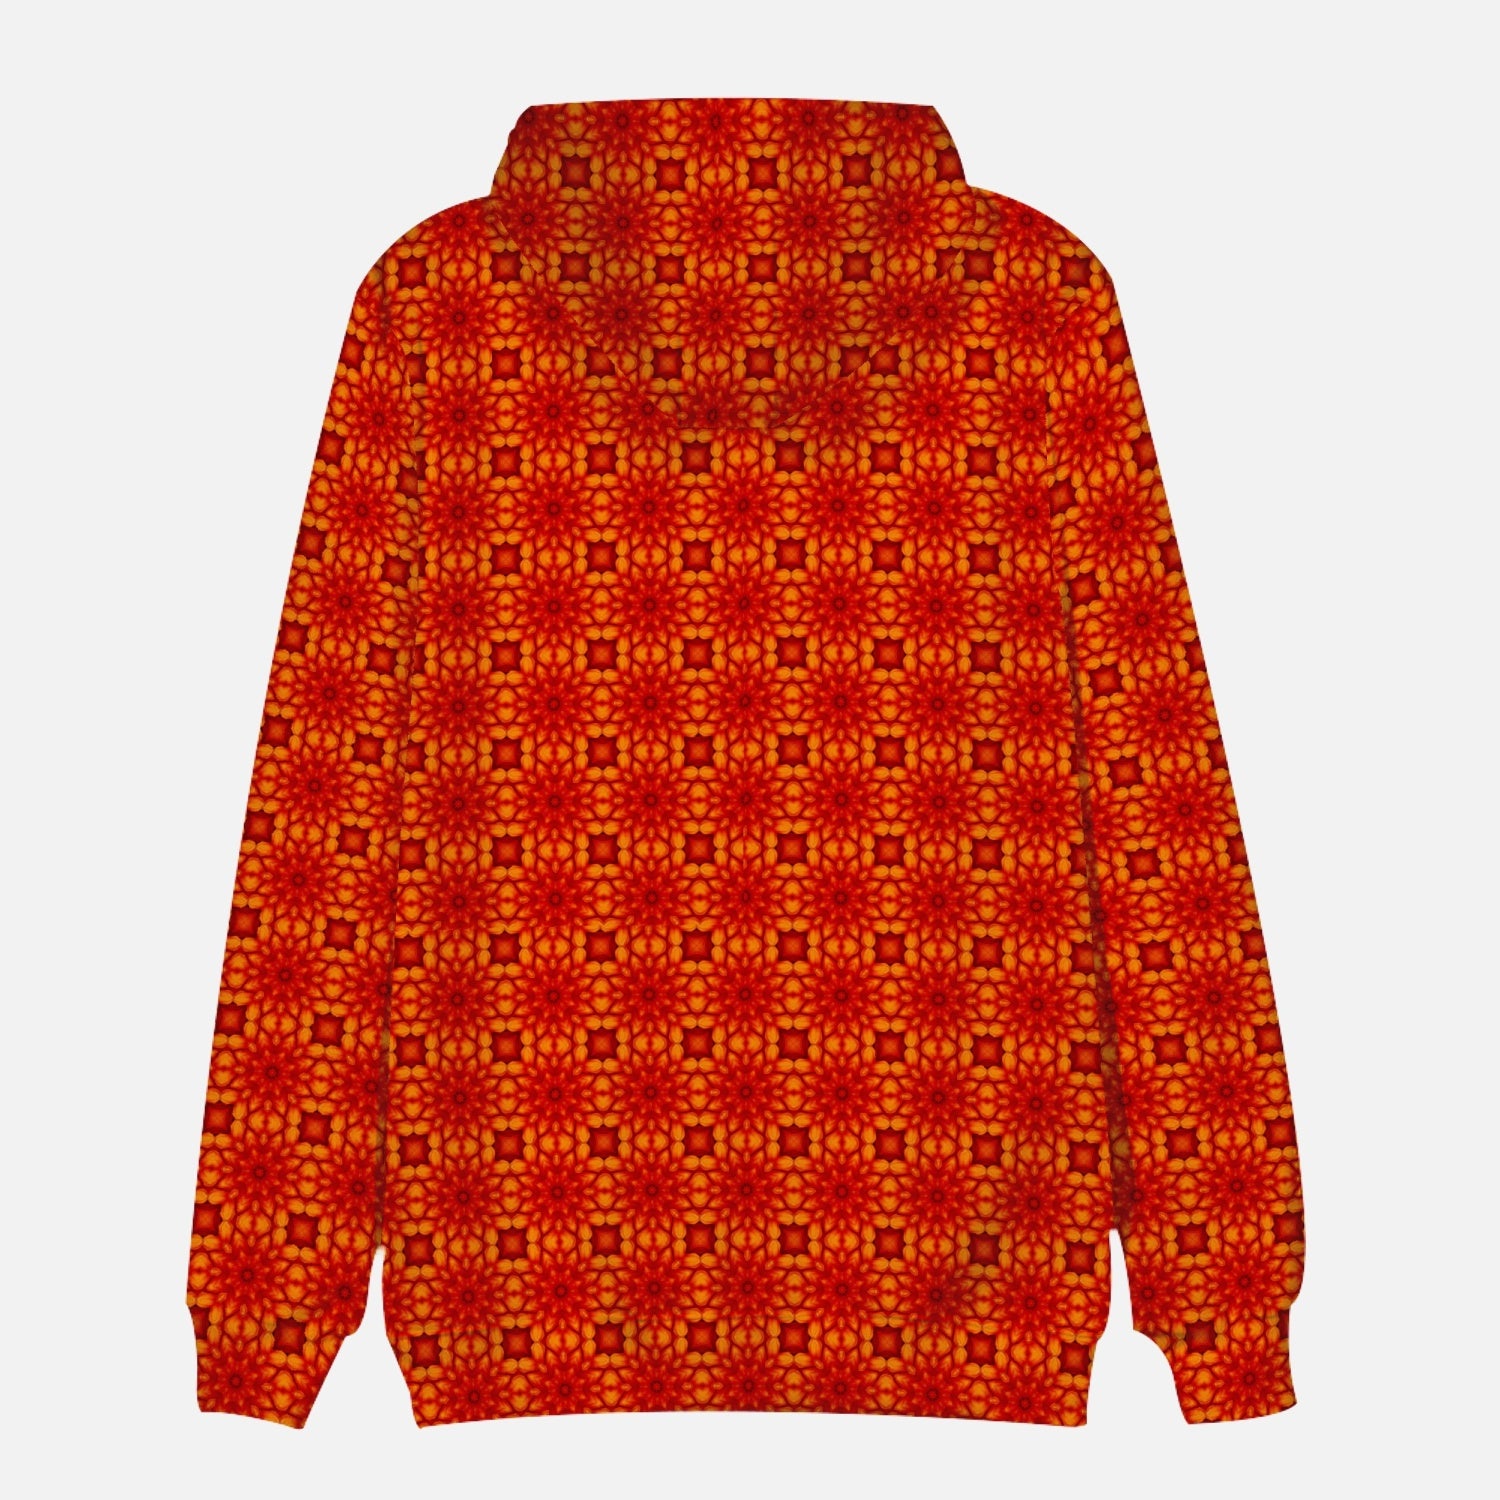 Orange Sacral Chacra Round Collar Hoodie, by Sensus Studio Design